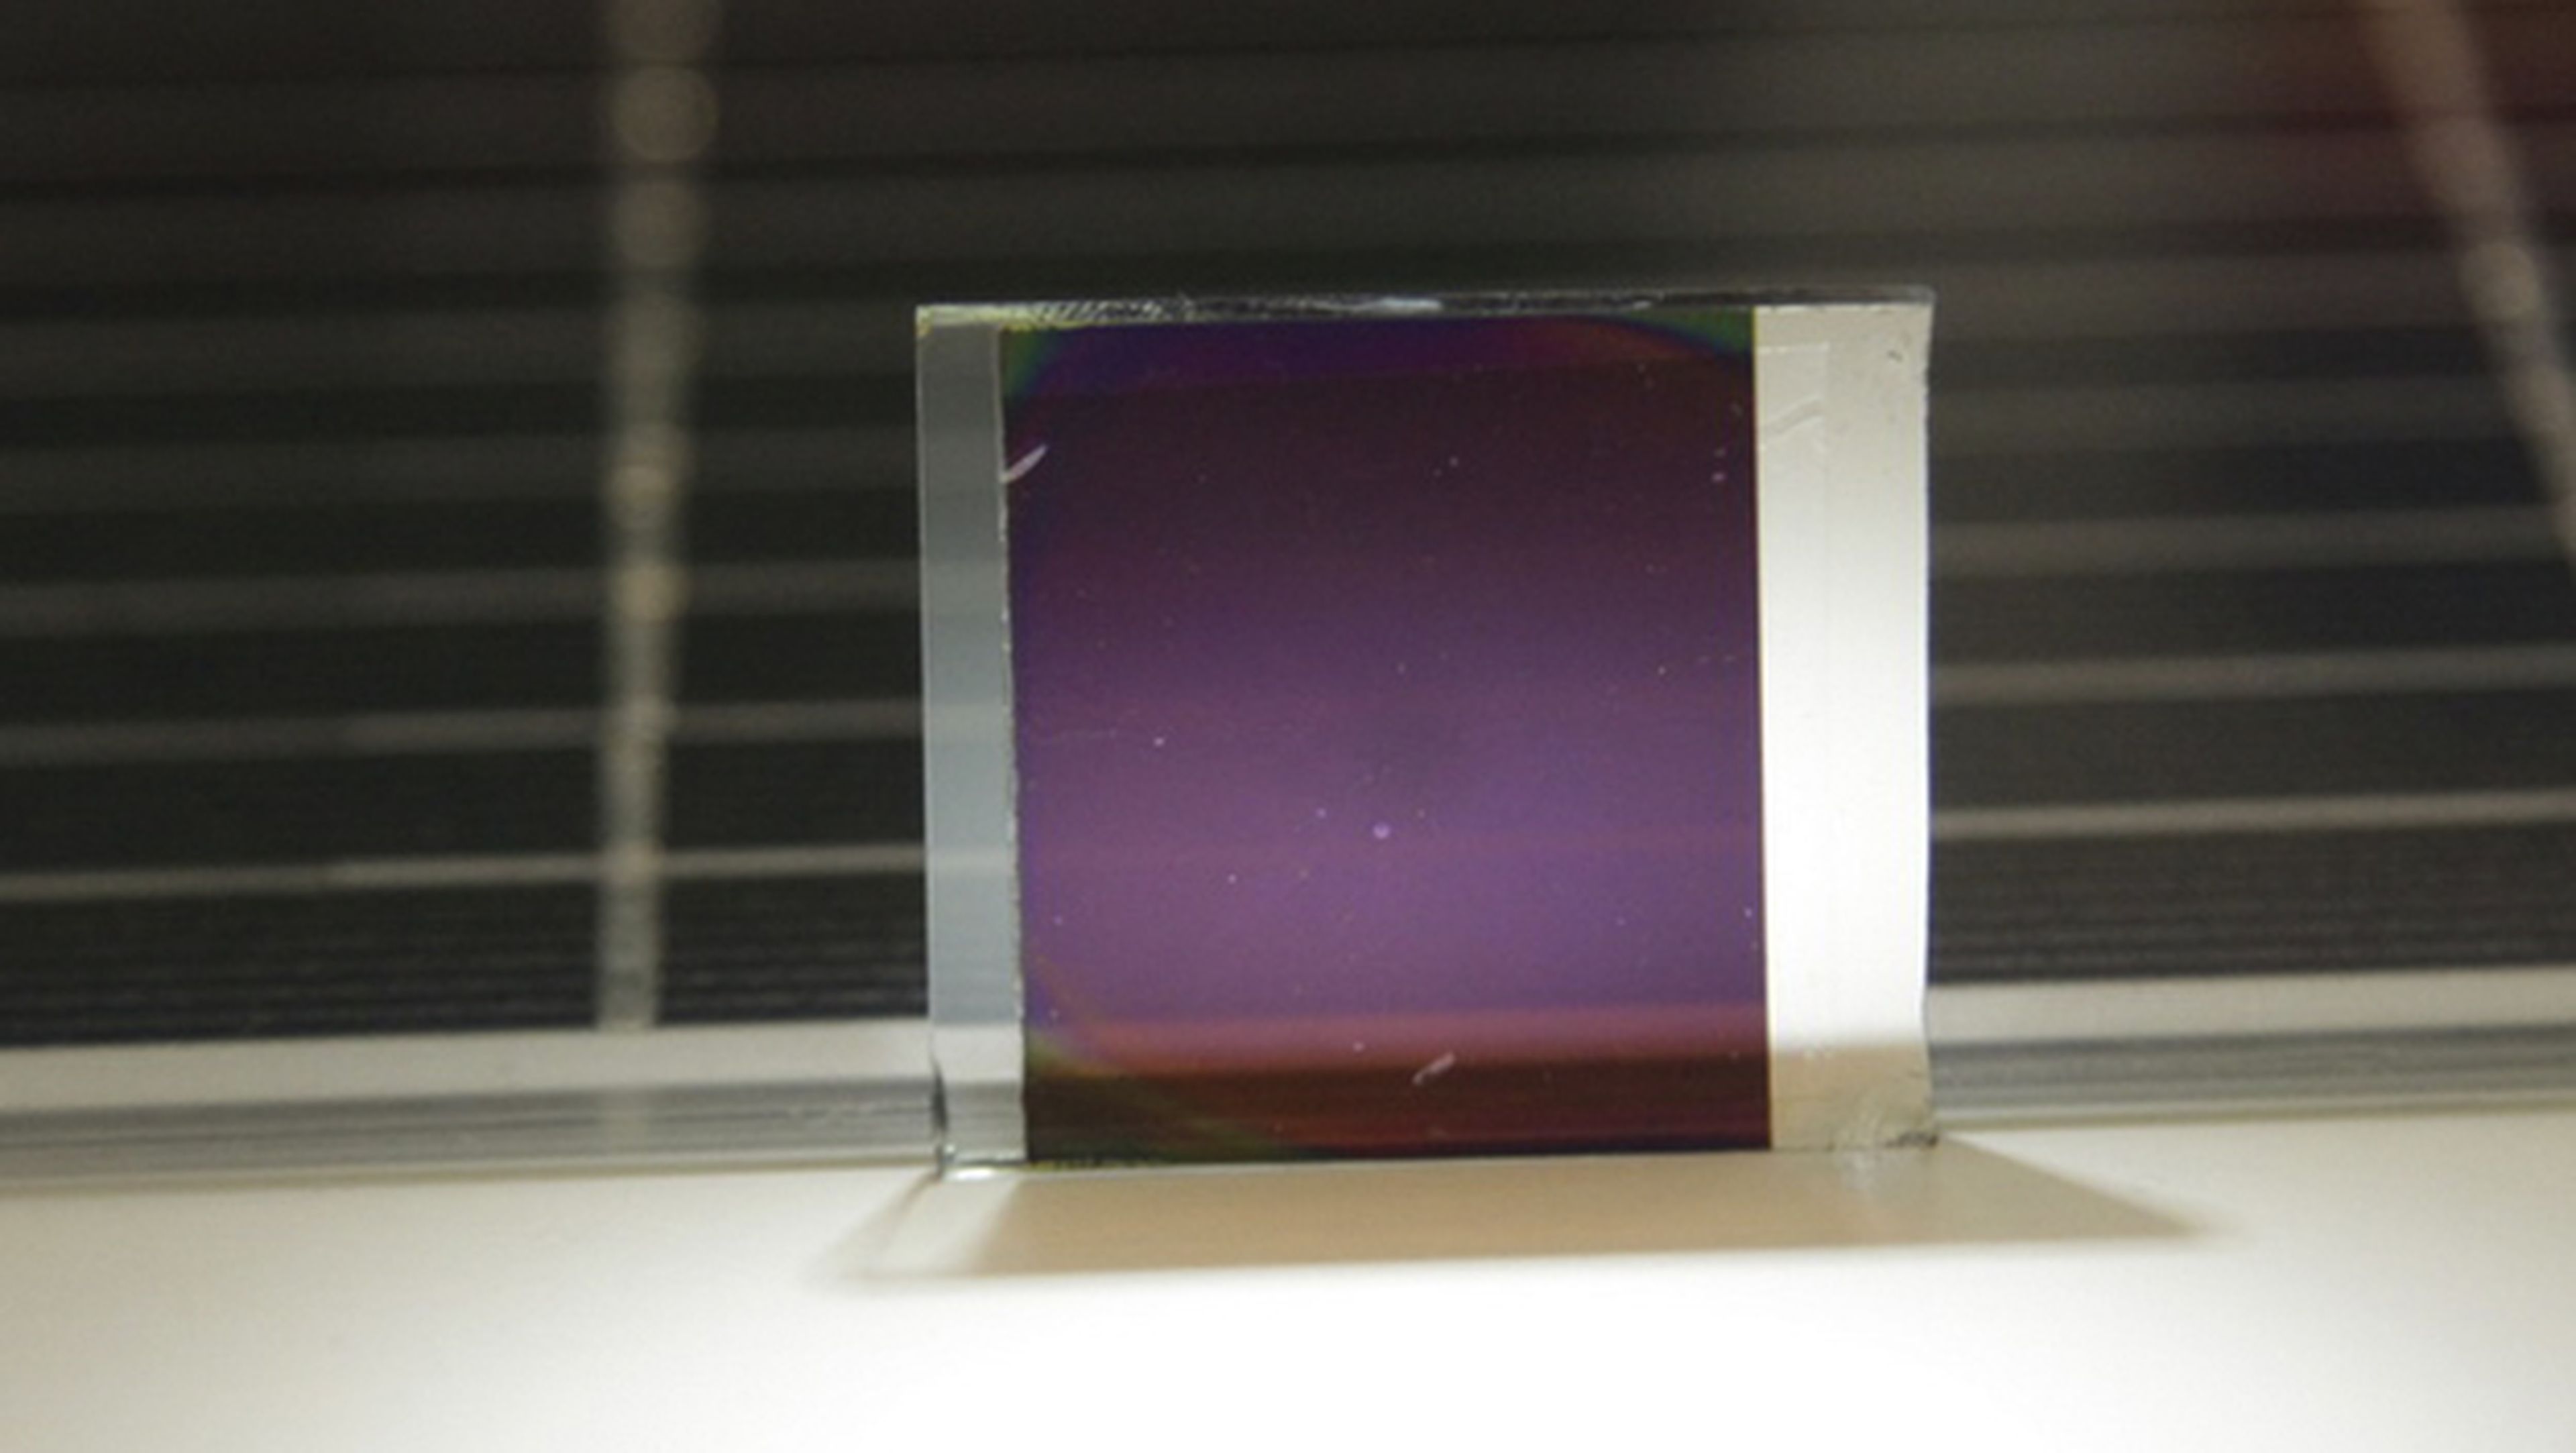 Crean células solares transparentes low cost a base de grafeno